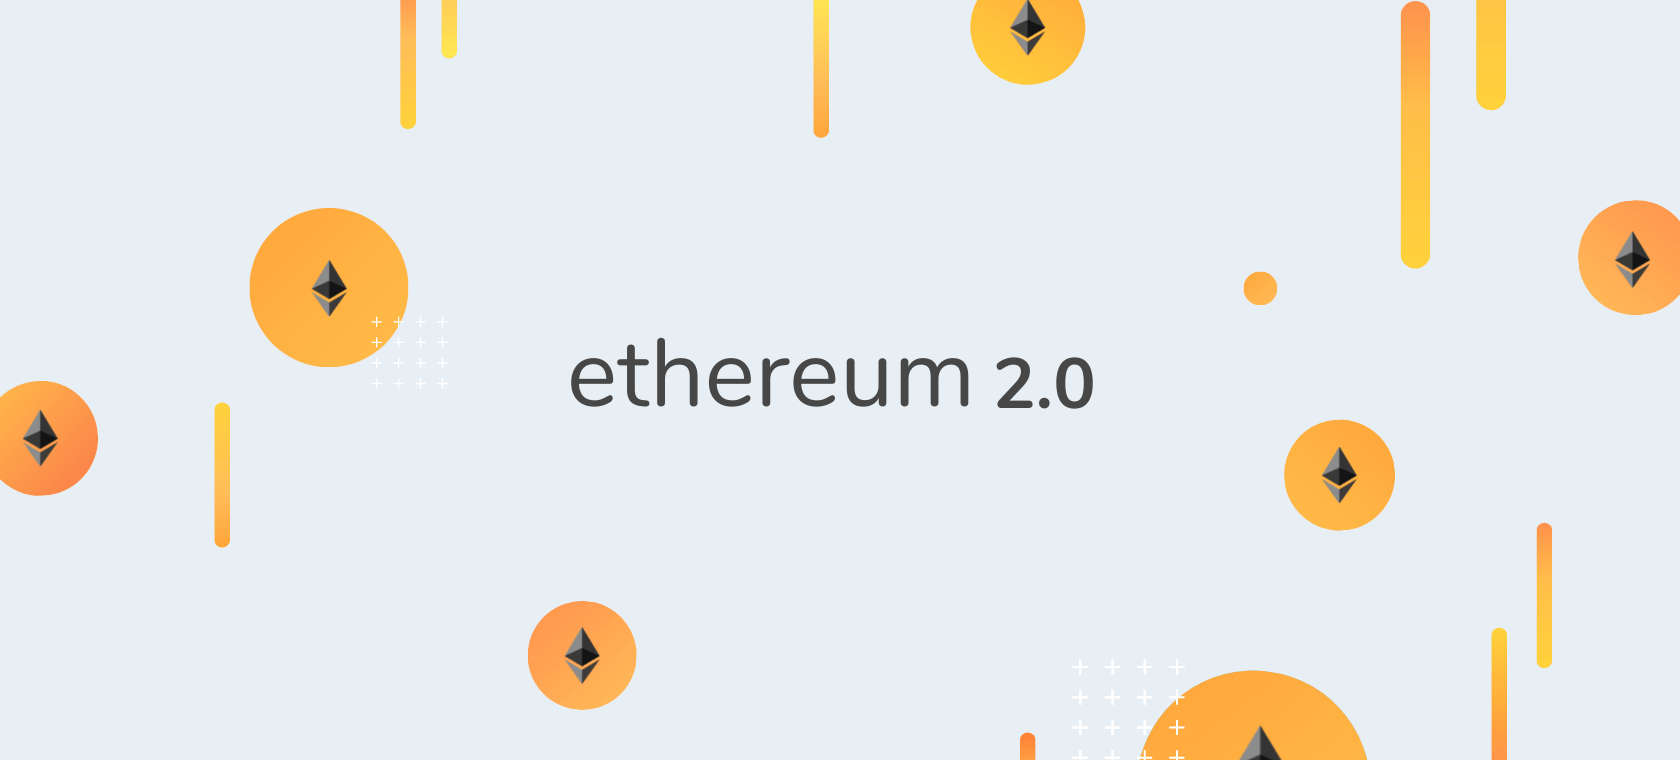 Ethereum 2.0 - scaling of the most popular blockchain platform